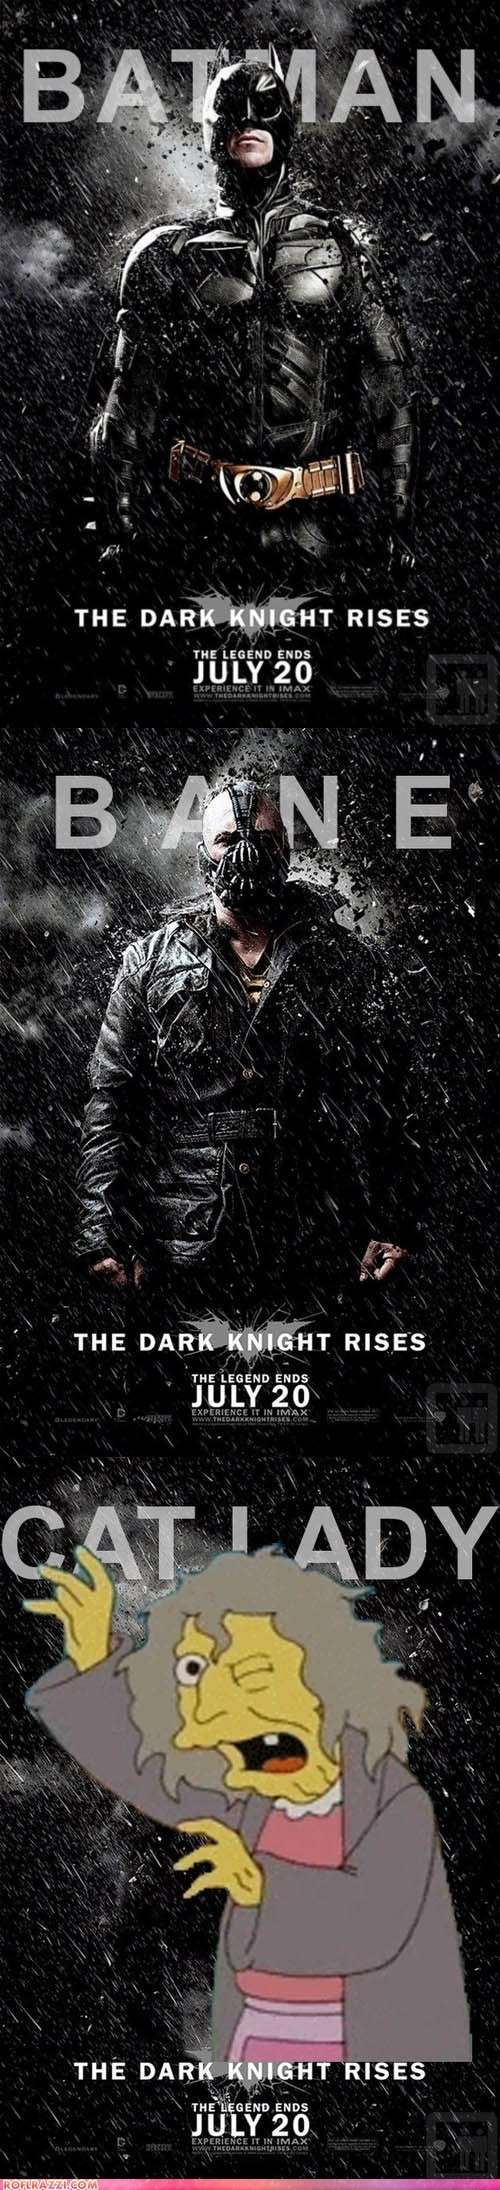 The Dark Knight Rises (2012, Christopher Nolan) - Page 15 L4byff10